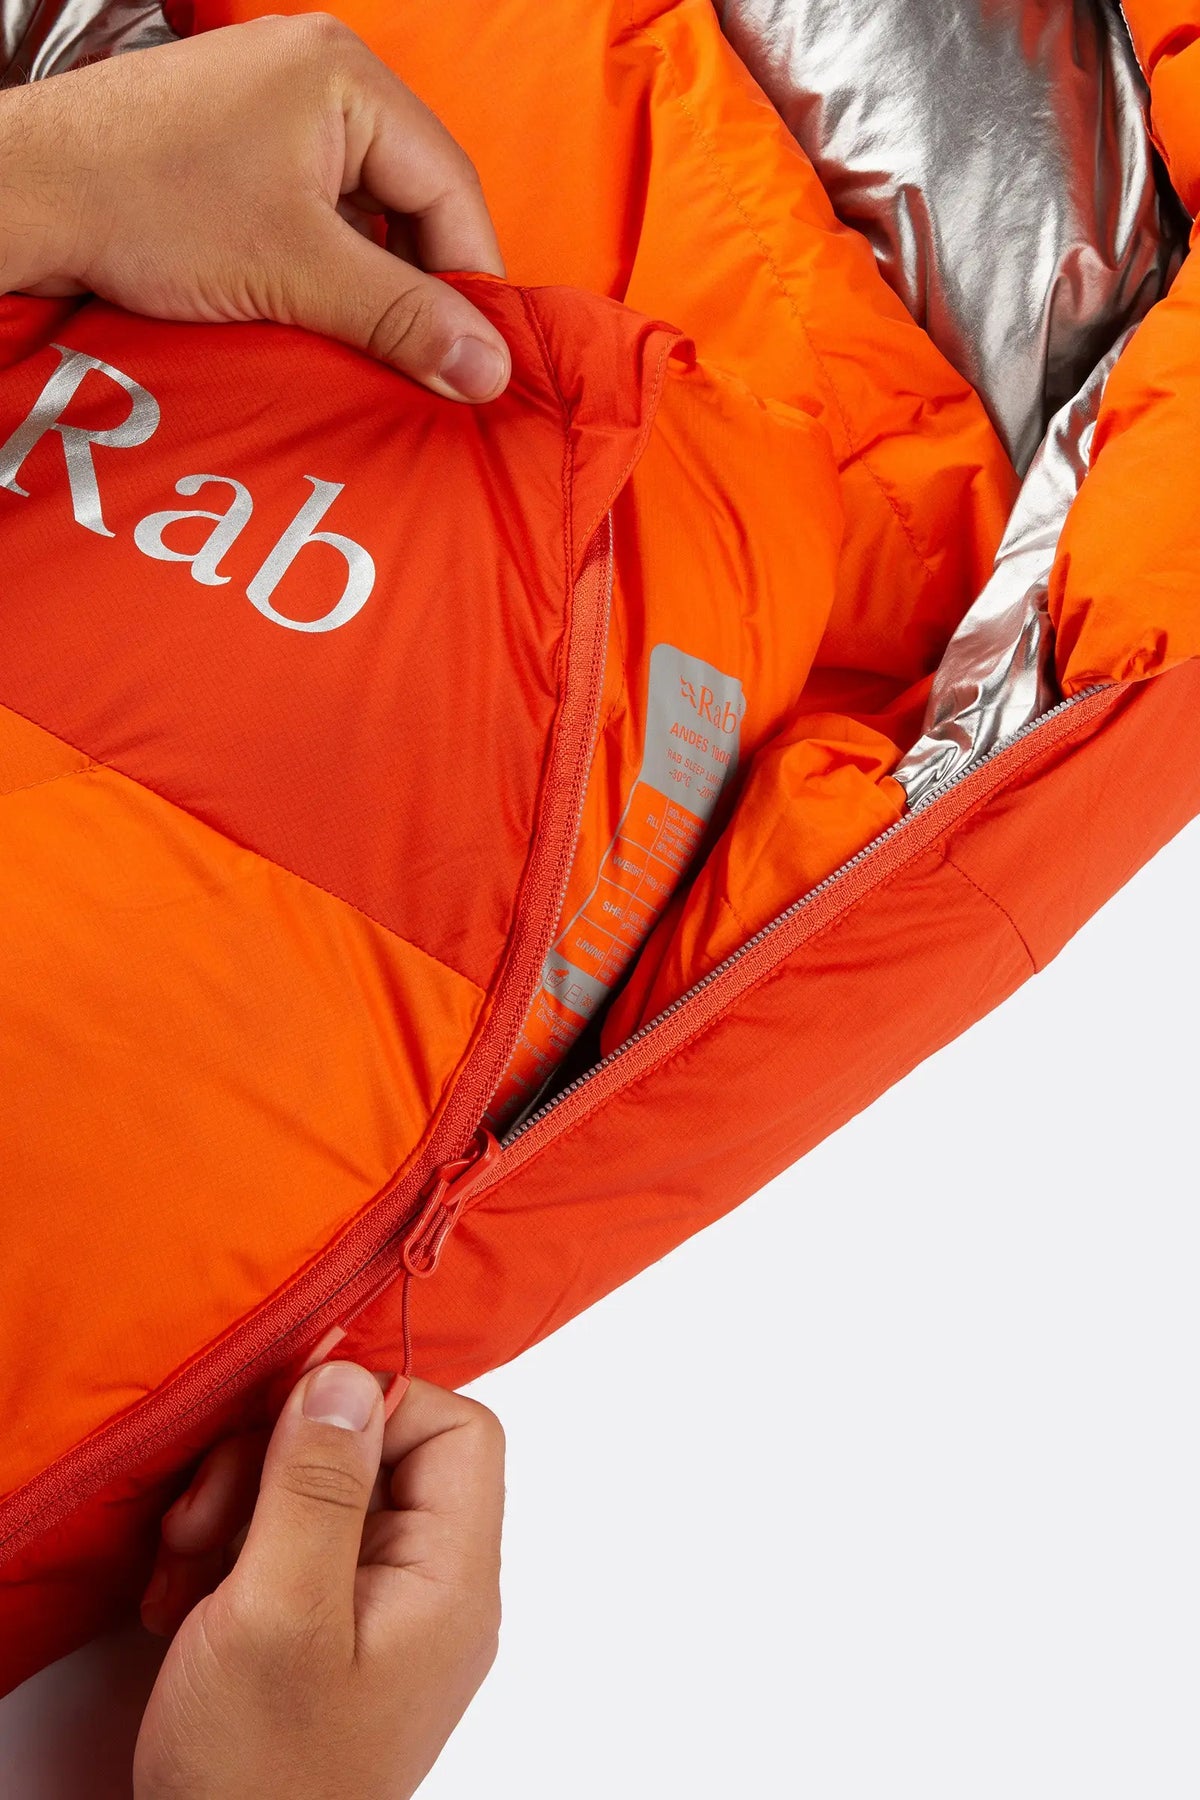 Rab Andes Infinium 1000 Down Sleeping Bag (-28C)